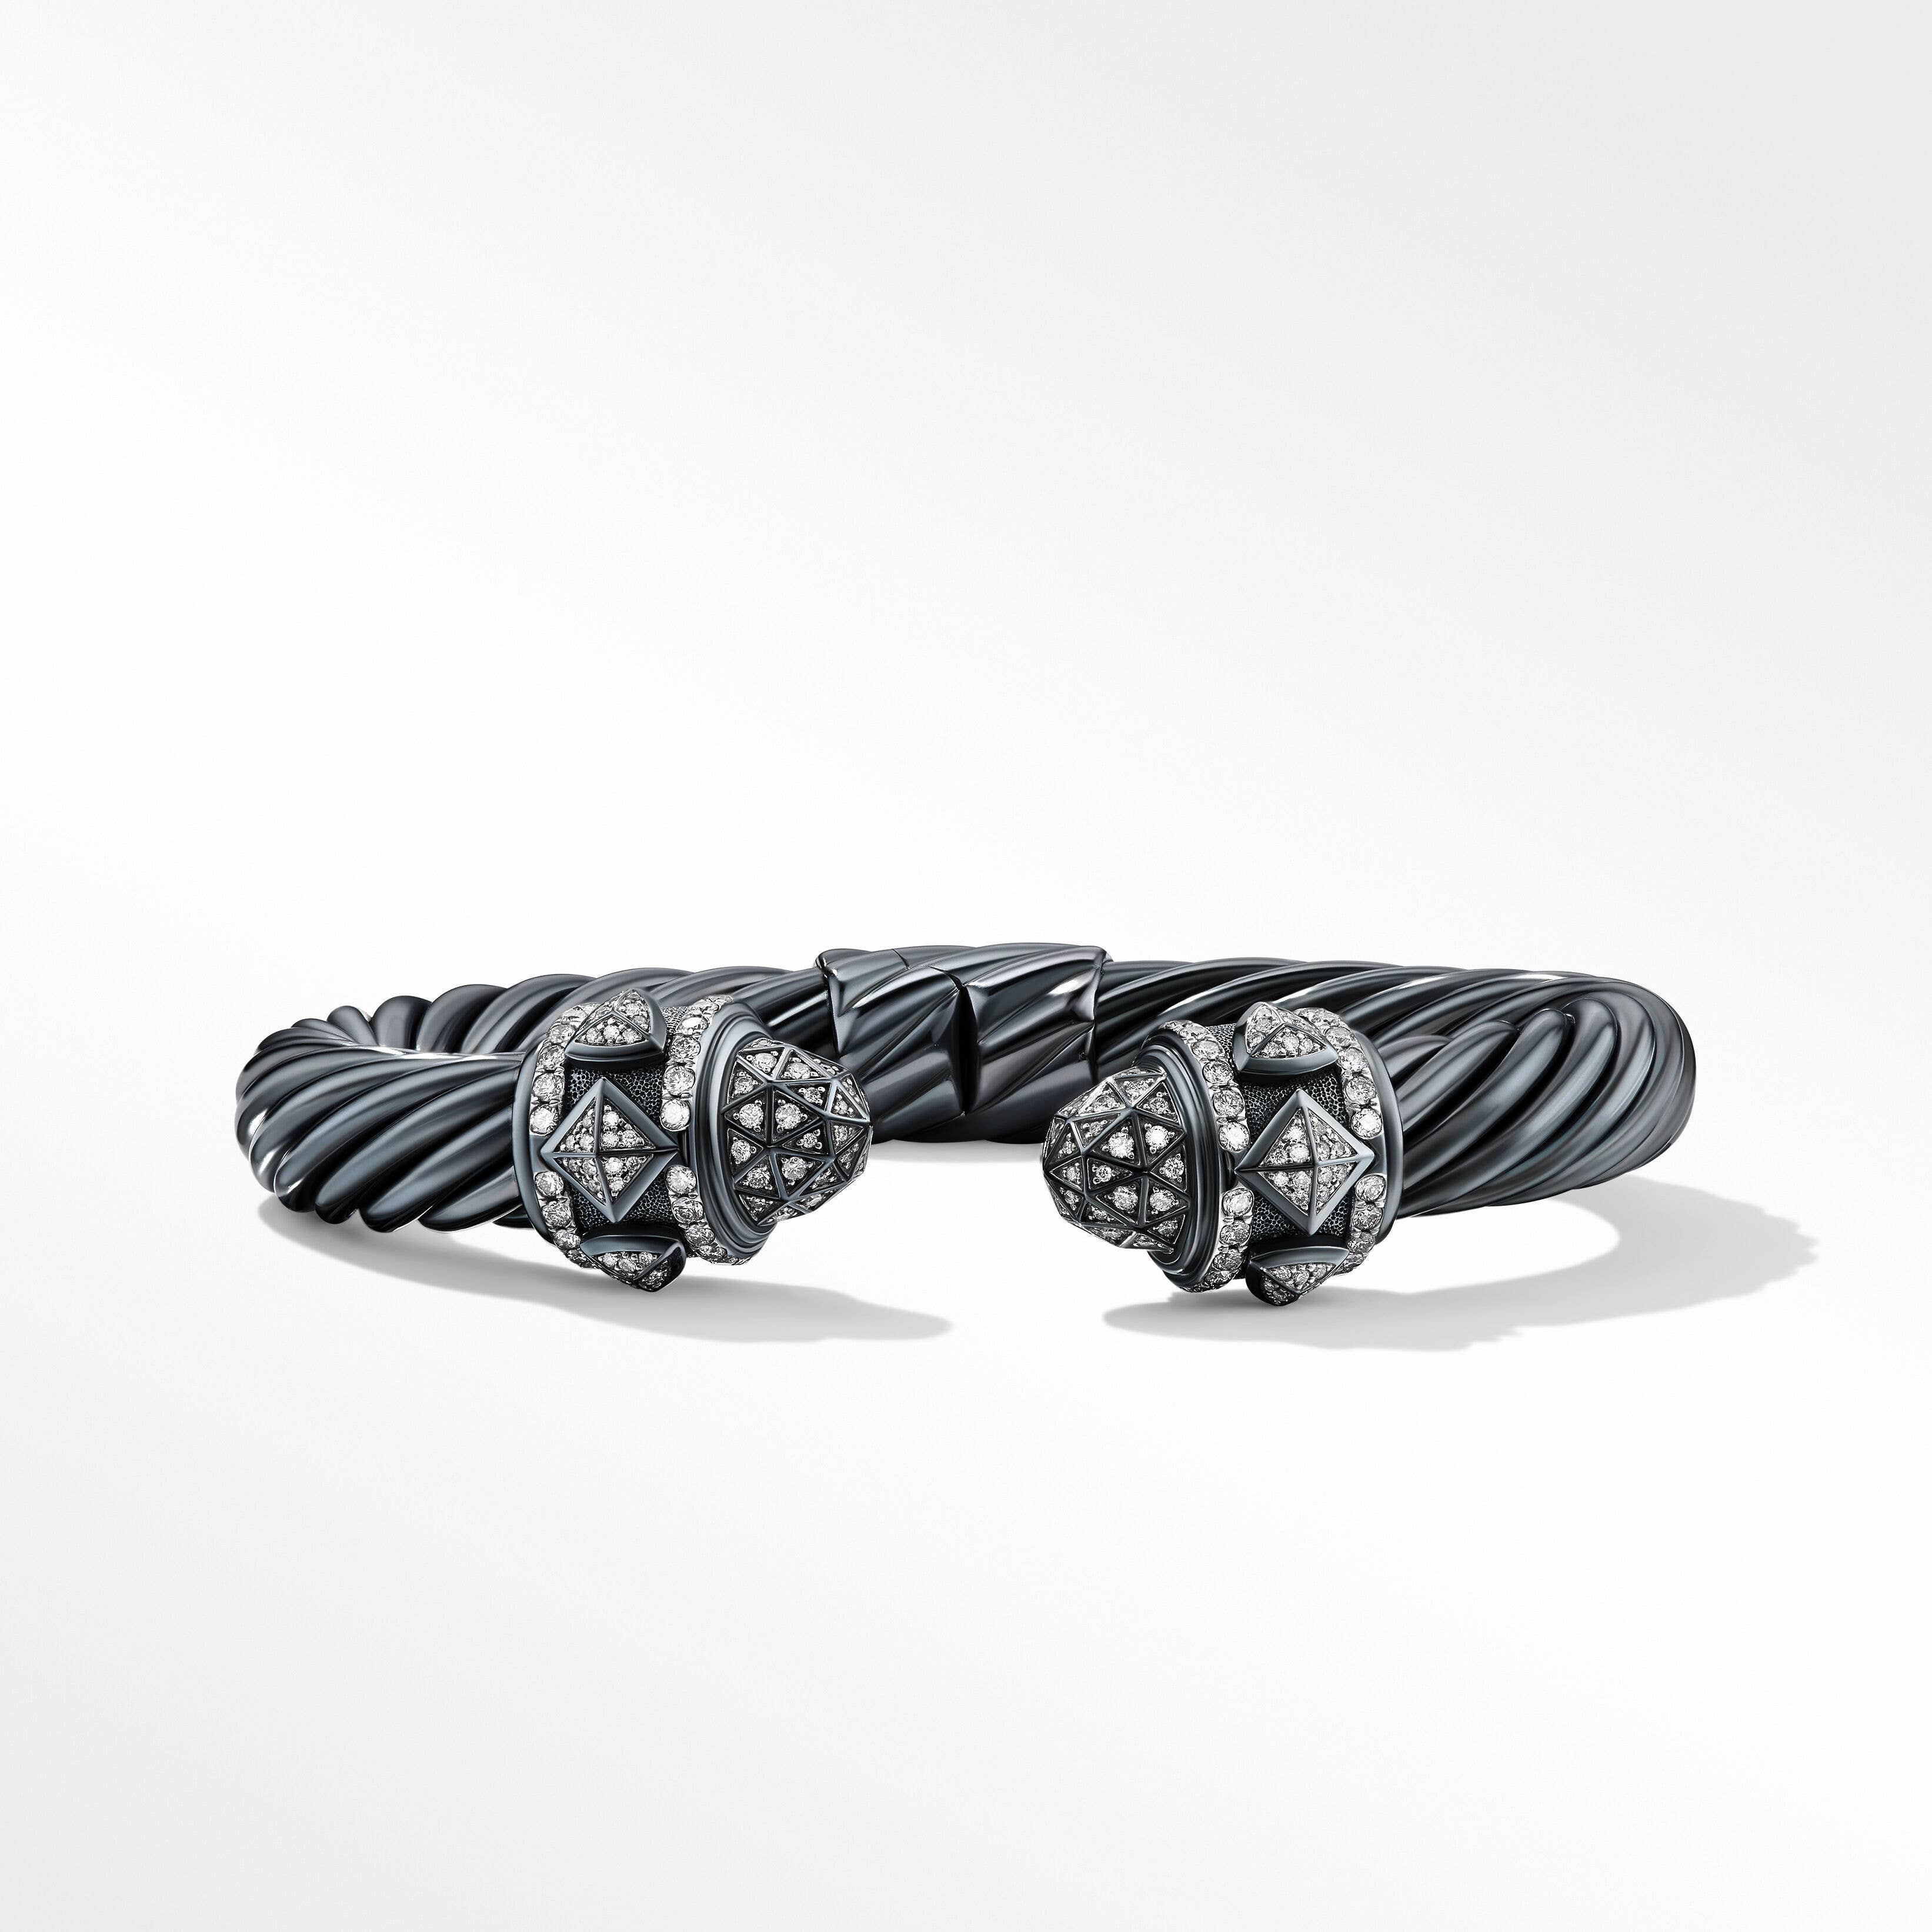 Renaissance Bracelet in Blackened Silver with Pavé Diamonds